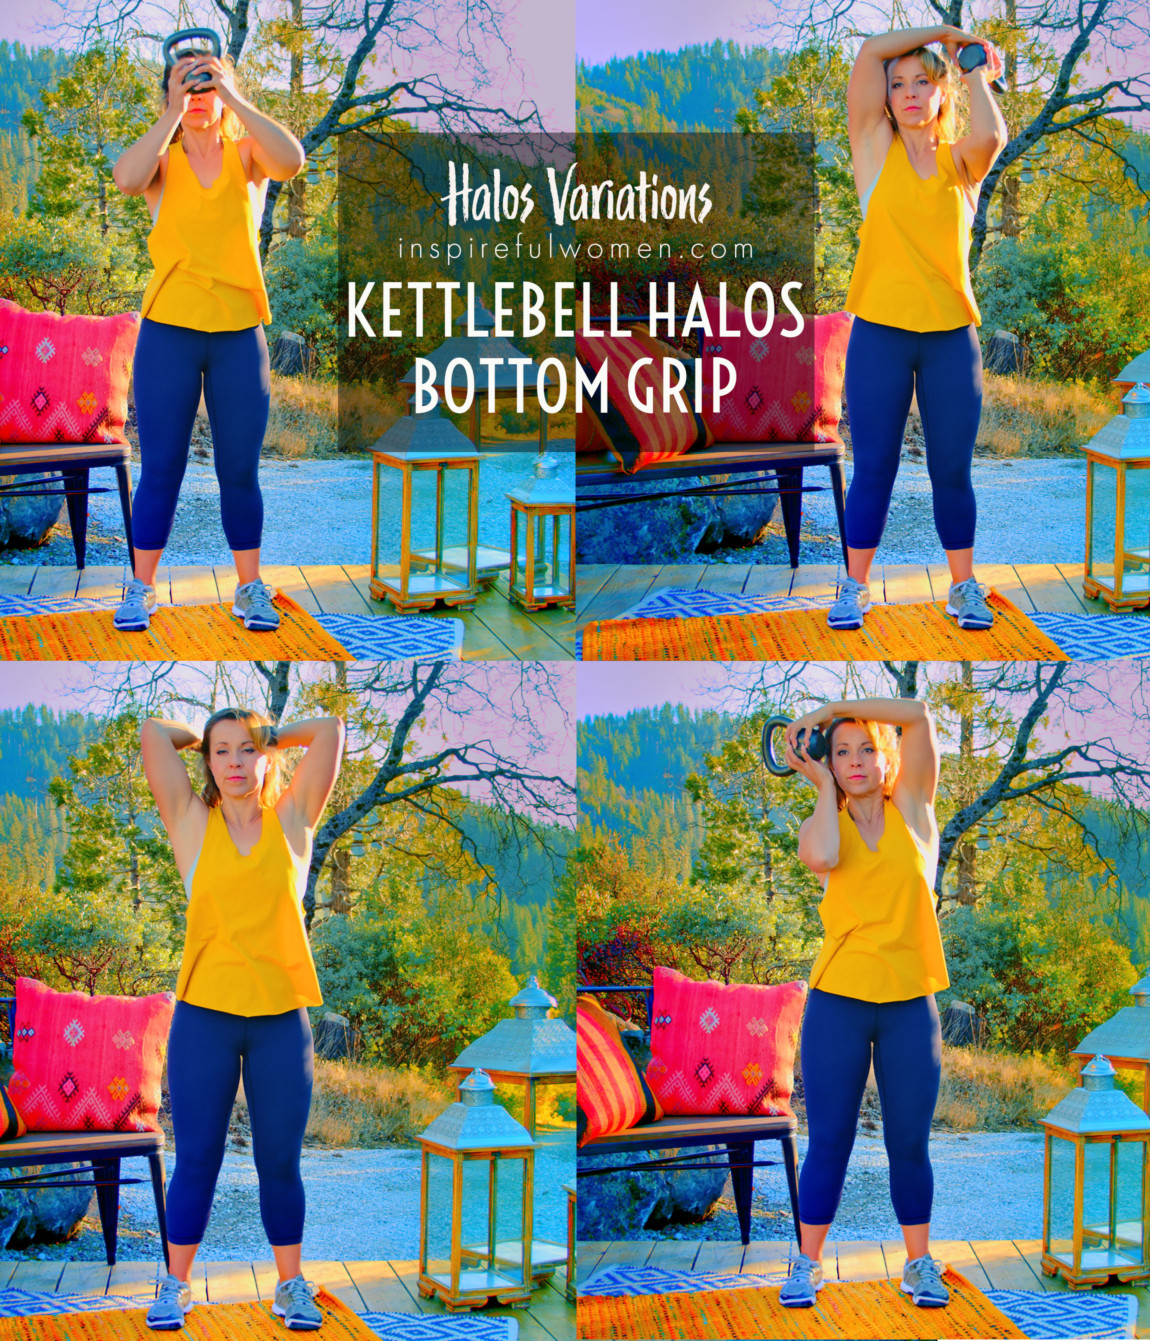 kettlebell-halos-bottom-grip-shoulder-joint-exercise-variation